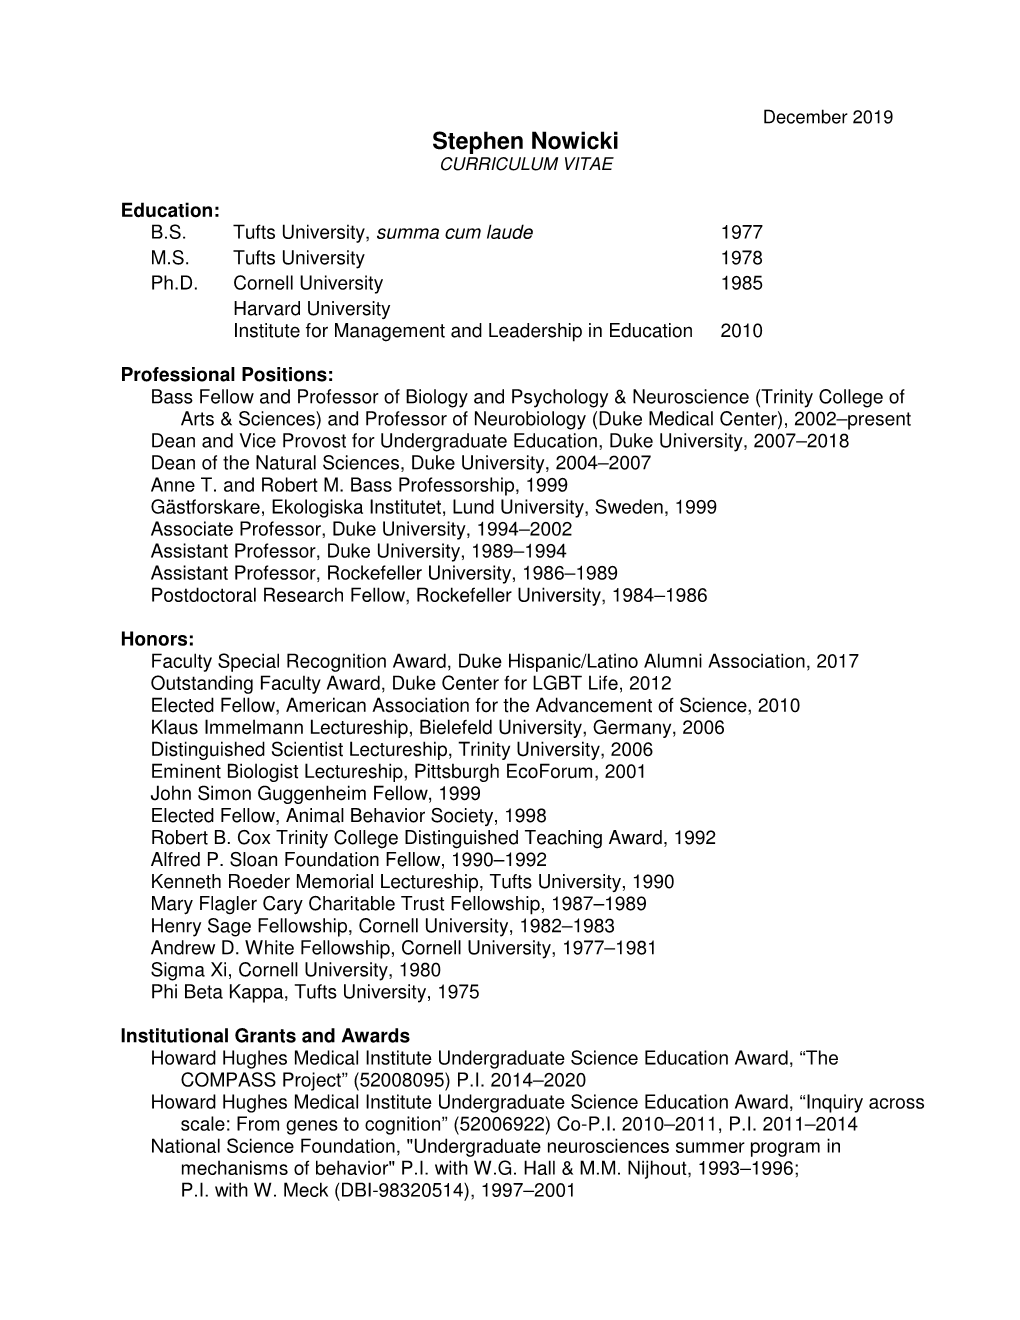 A PDF of Steve's Curriculum Vitae